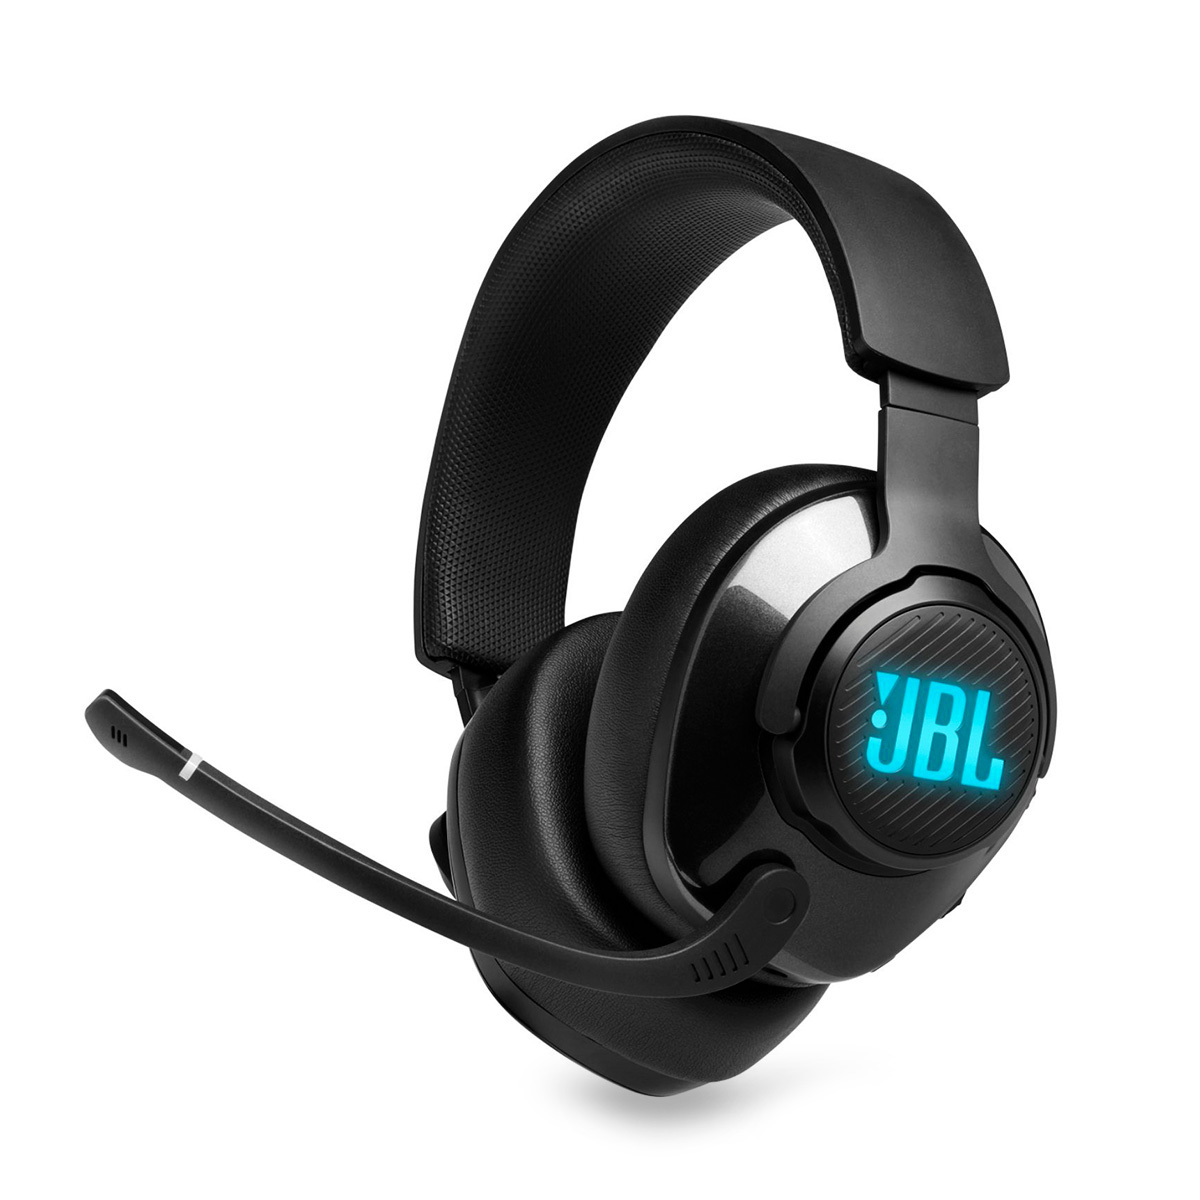 Audífonos Gamer JBL Quantum 400 / DTS Headphone X v2.0 / RGB / USB / 3.5 mm / Laptop / PC / Smartphone / Tablet /PS4 / PS5 / Xbox One / Xbox Series / MacOS / Negro